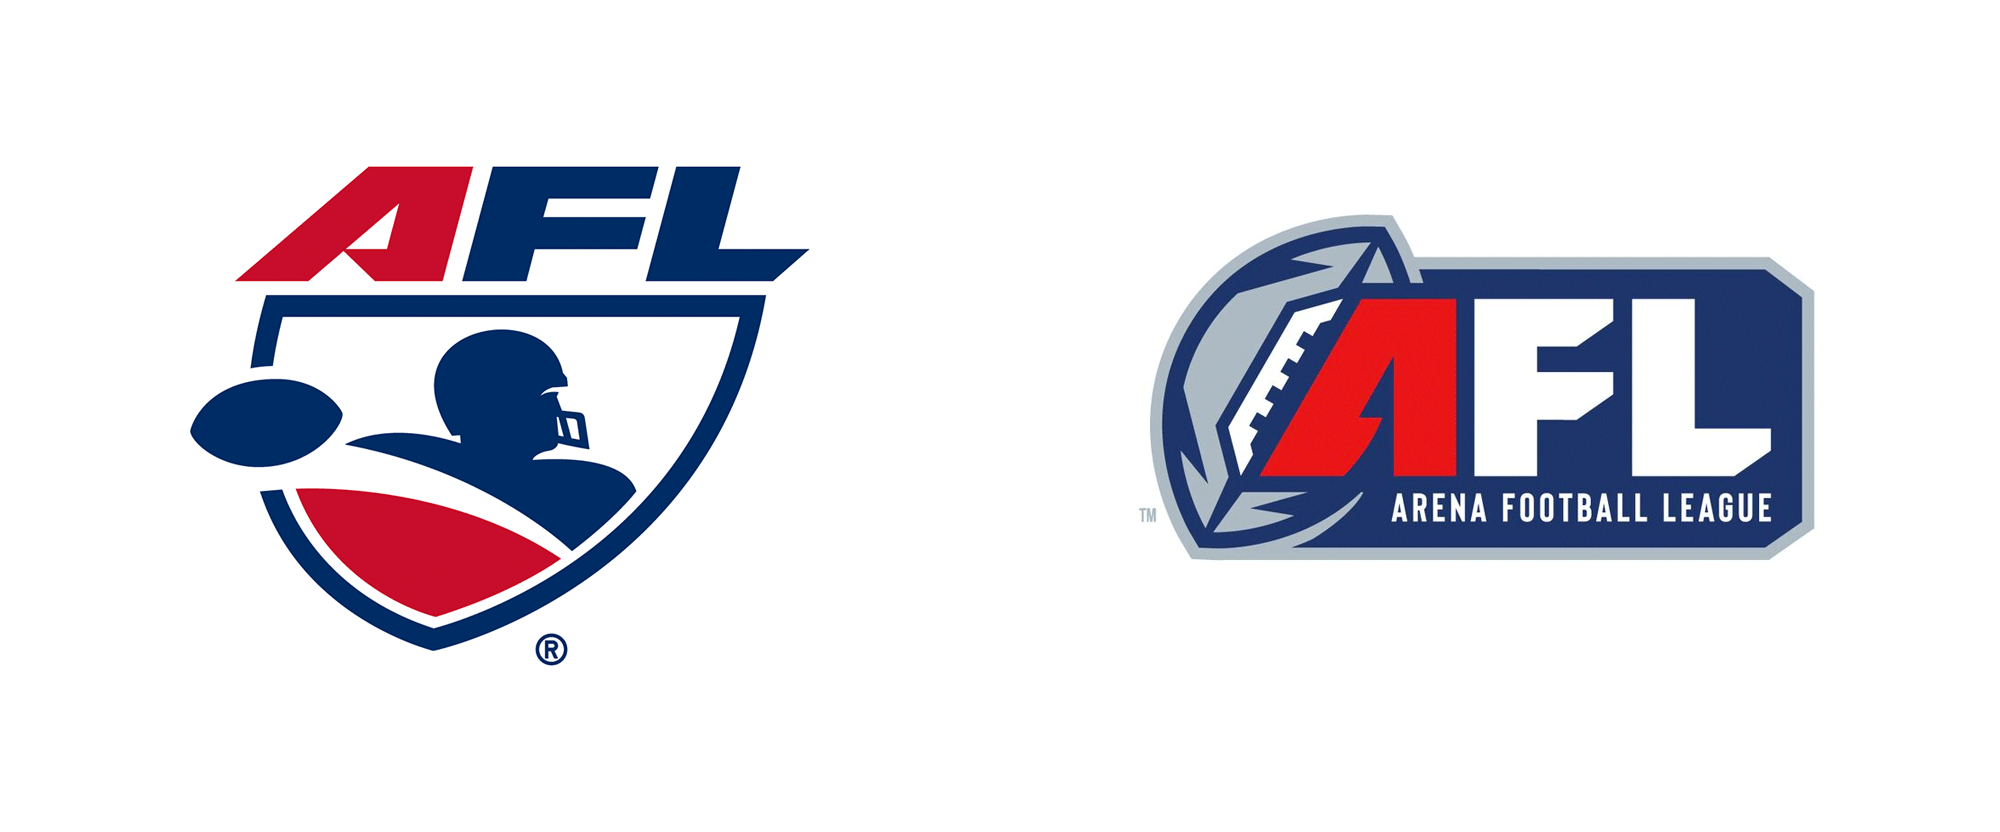 Chuck Logo - Brand New: New Logo for Arena Football League by Chuck Kacsur Design